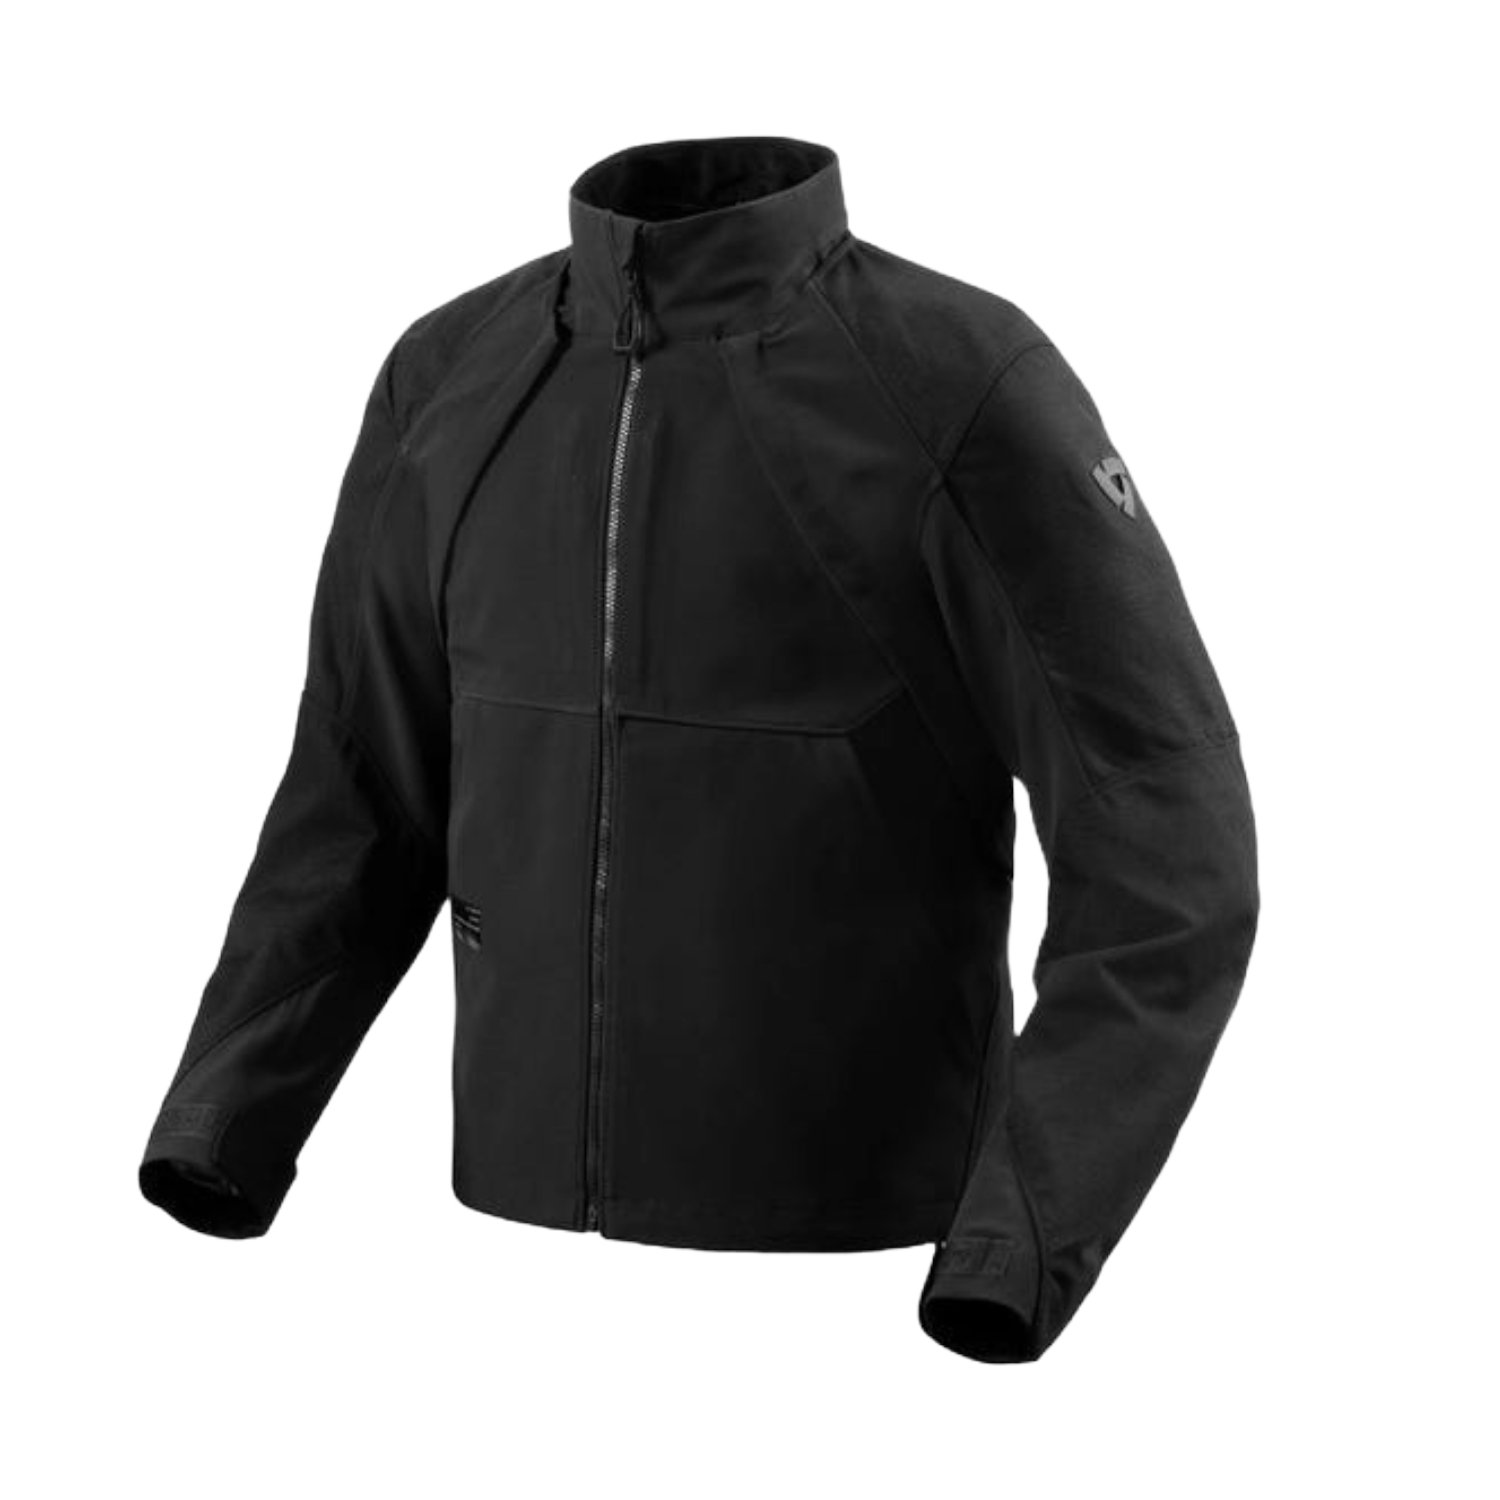 Image of REV'IT! Continent Wind Breaker Jacket Black Size XL ID 8700001370240